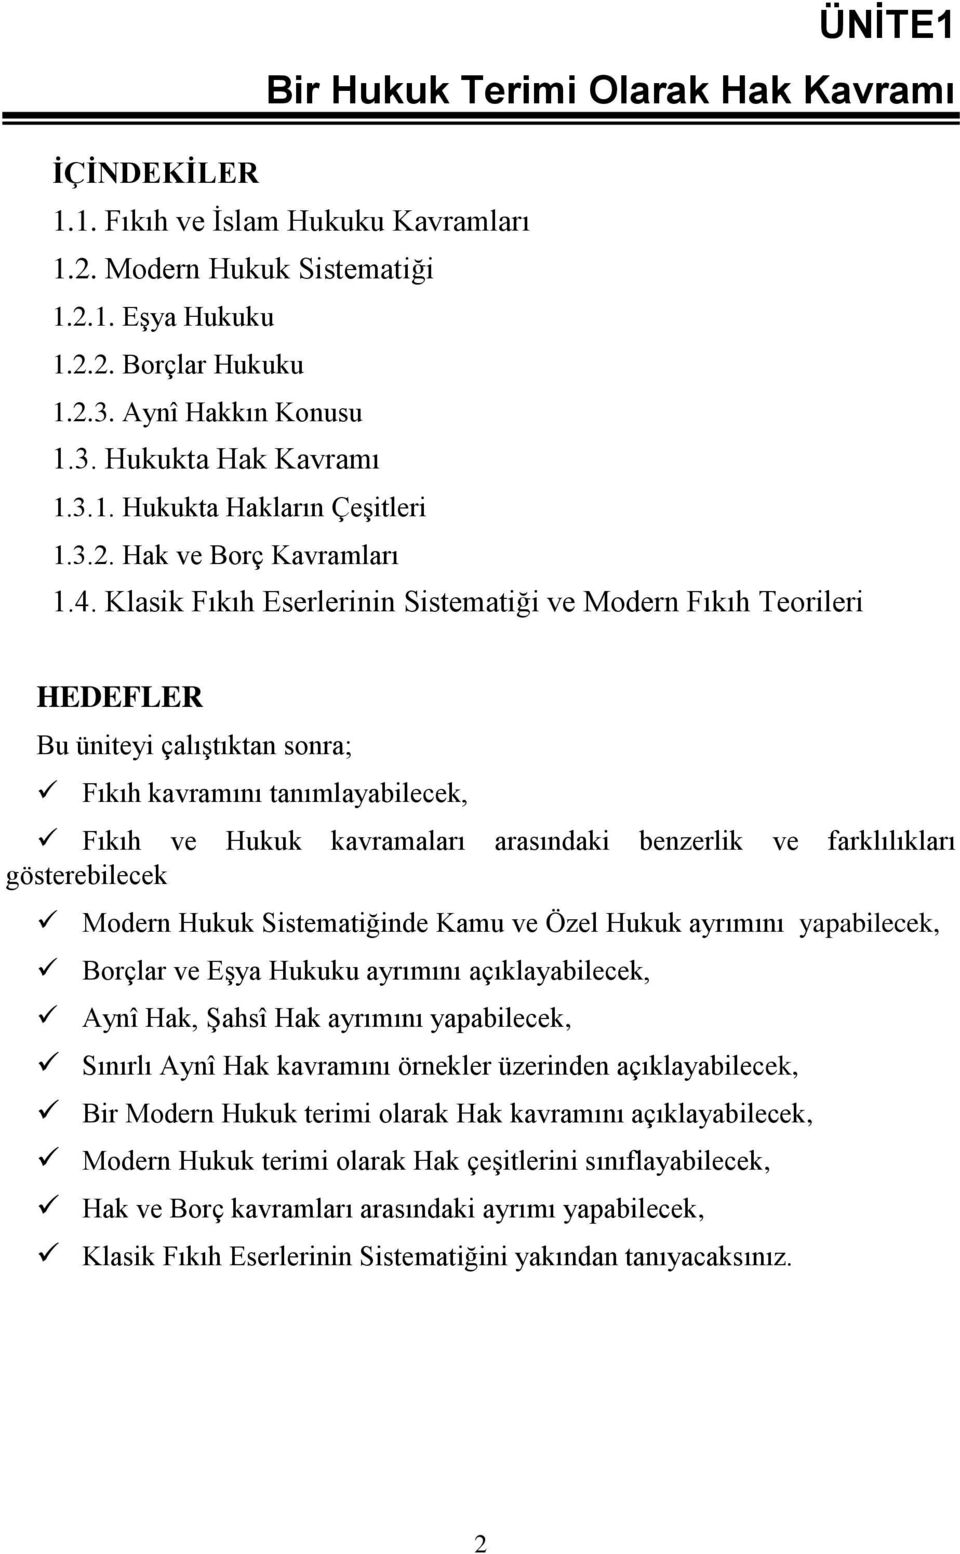 islam hukuku ii hafta 1 ogr gor irfan ince sakarya universitesi pdf free download